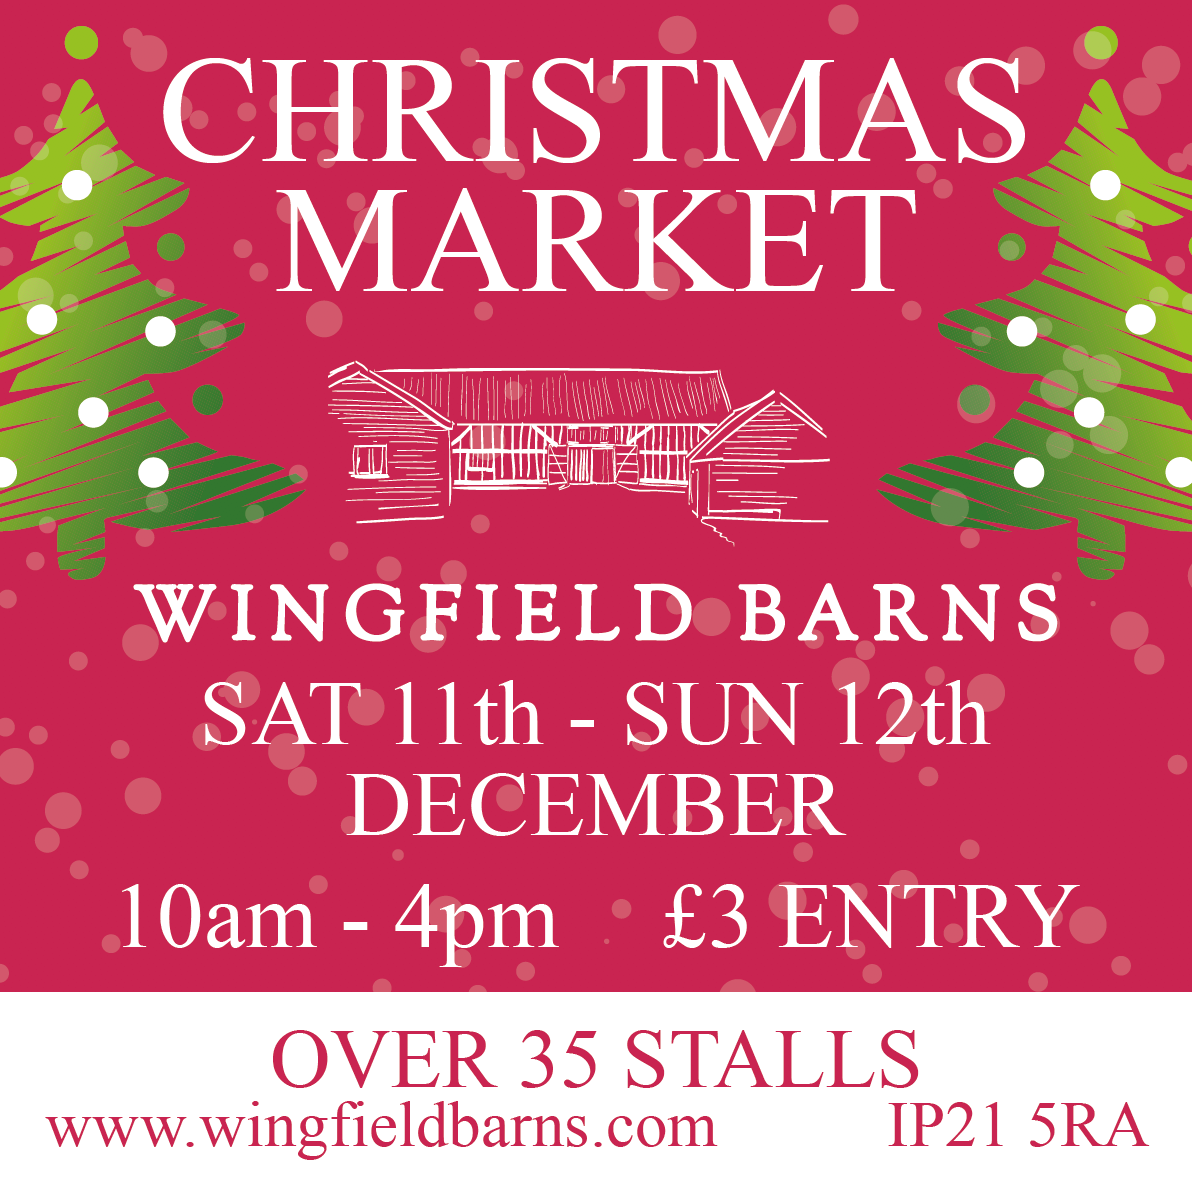 Wingfield Barns Christmas Market